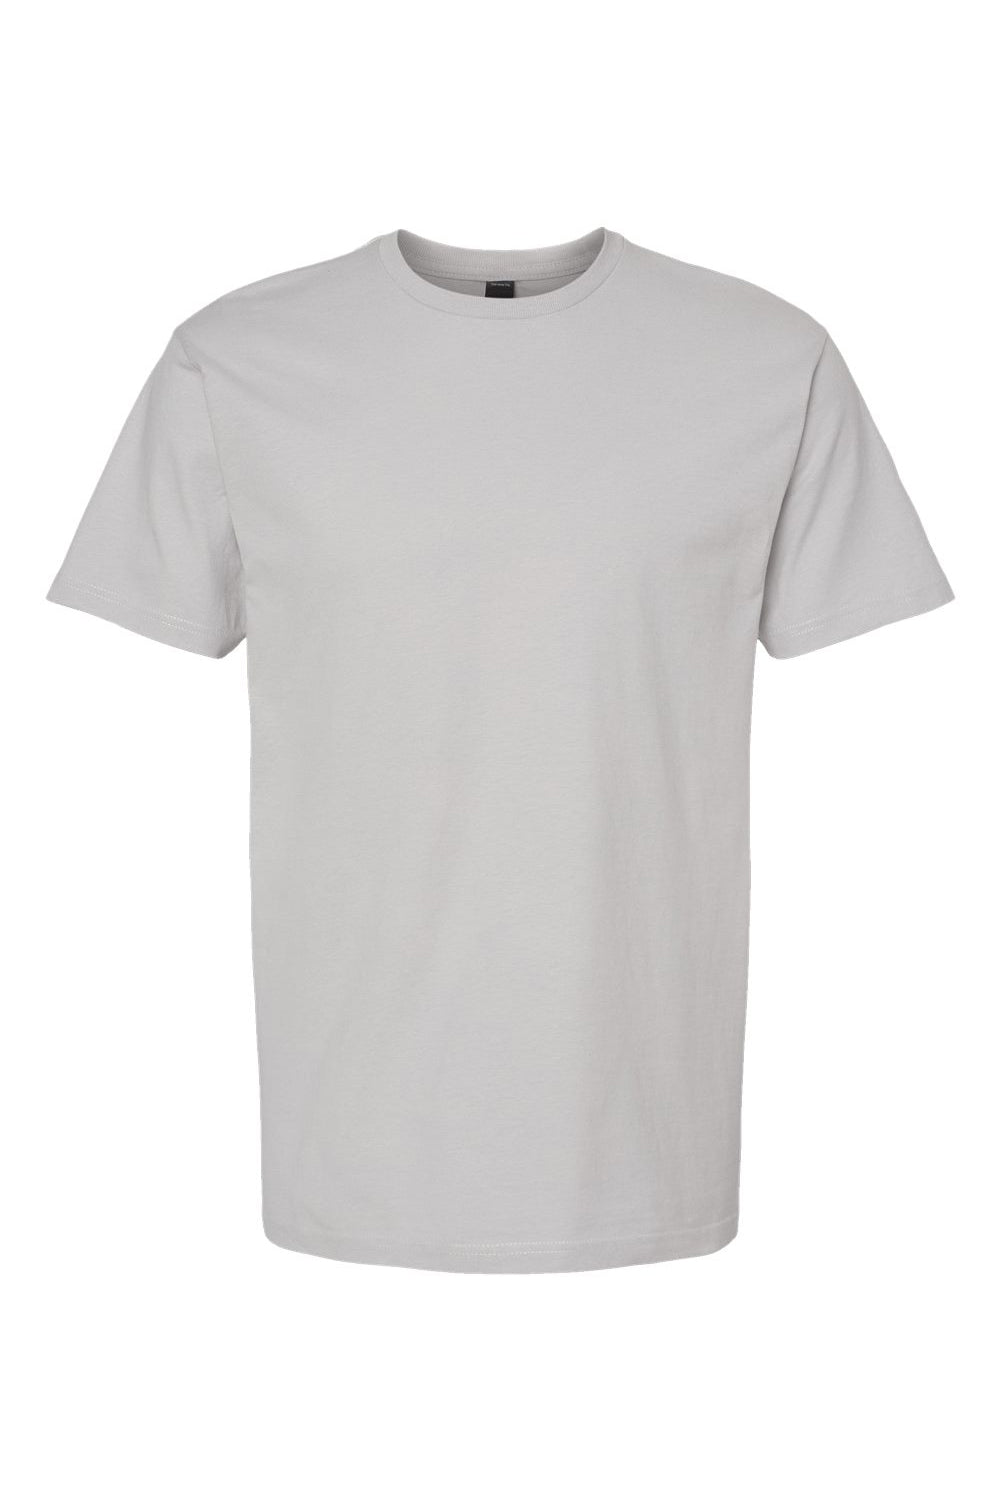 Tultex 290 Mens Jersey Short Sleeve Crewneck T-Shirt Silver Grey Flat Front